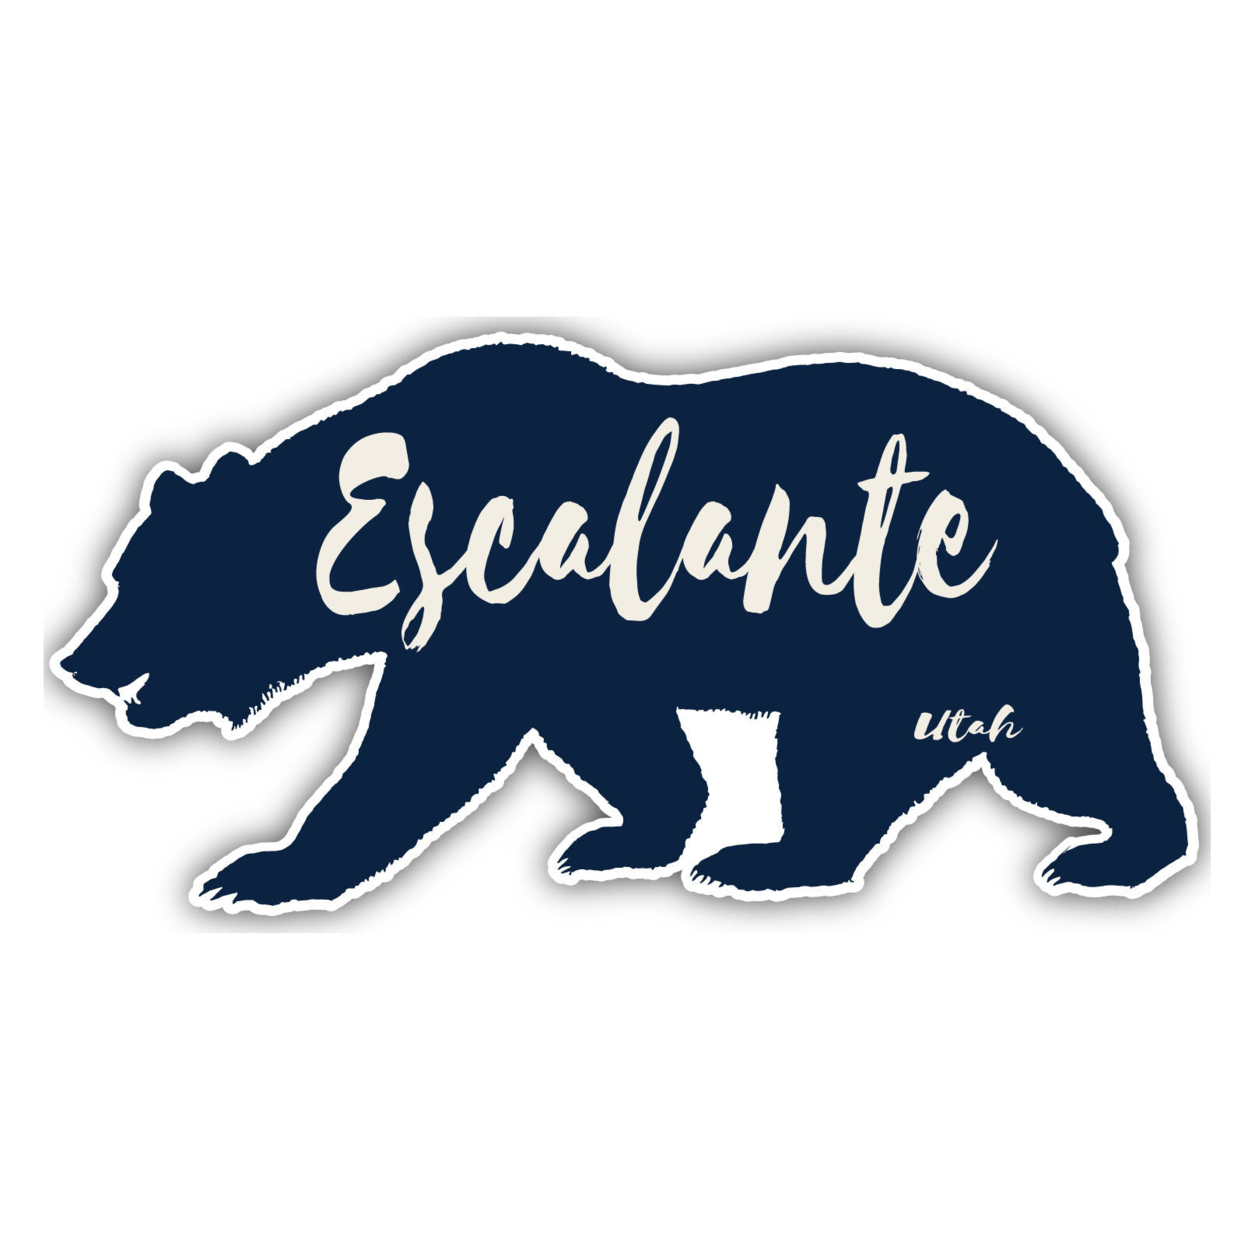 Escalante Utah Souvenir Decorative Stickers (Choose Theme And Size) - Single Unit, 6-Inch, Bear